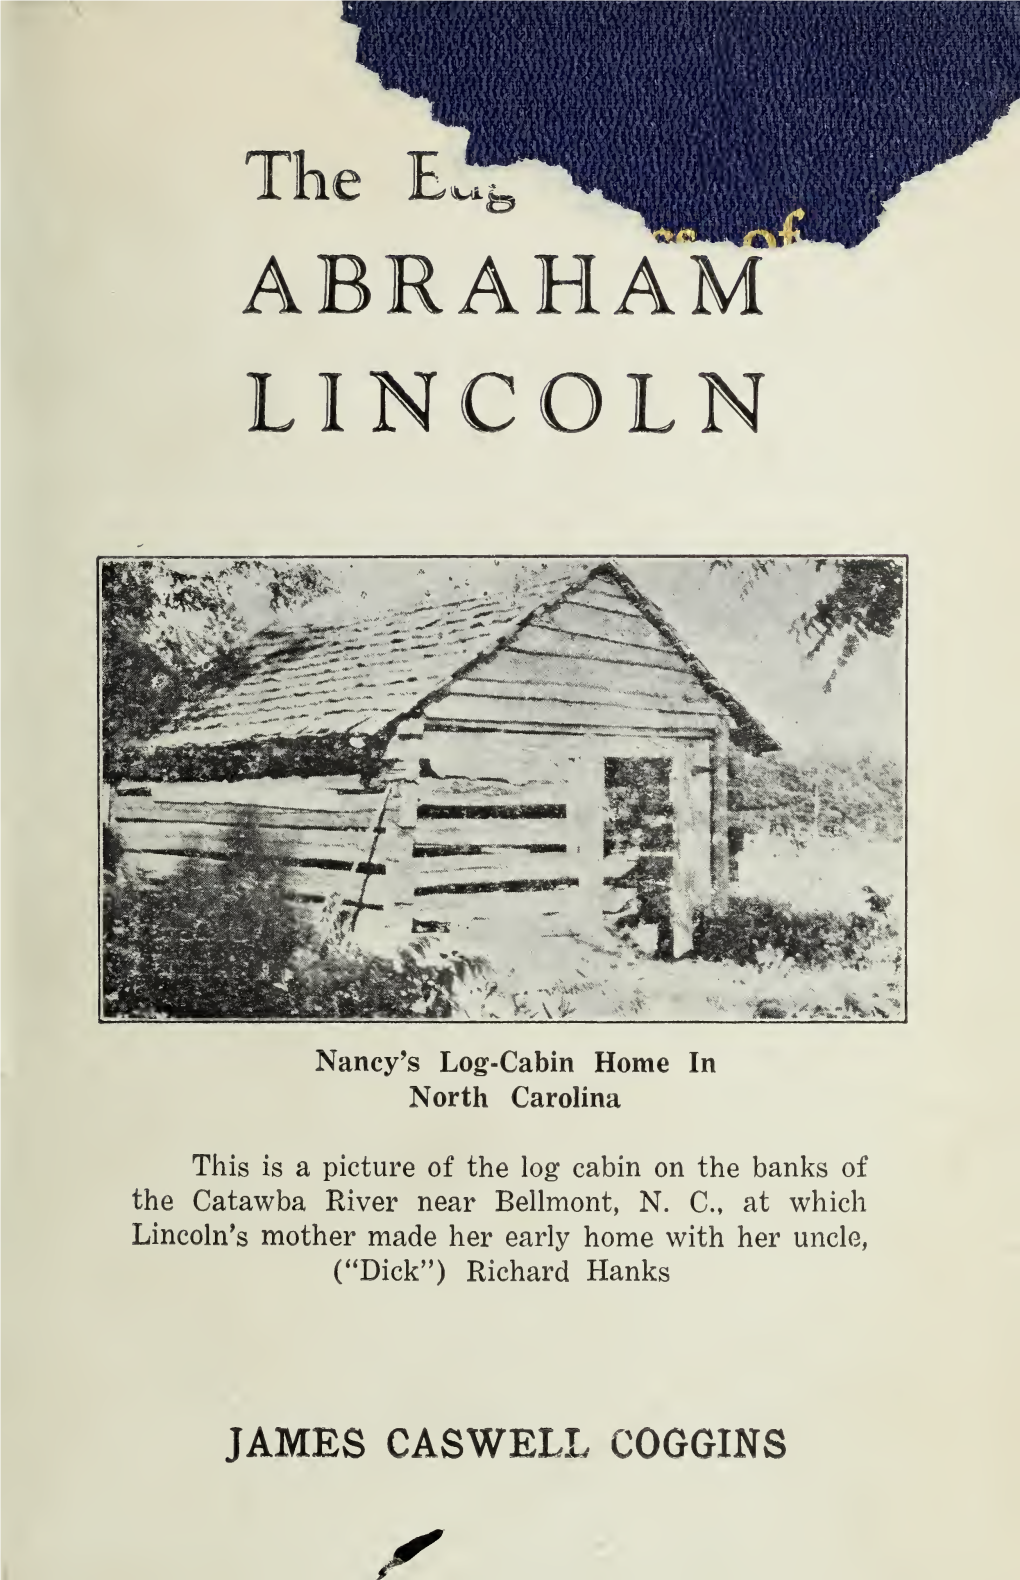 The Eugenics of President Abraham Lincoln